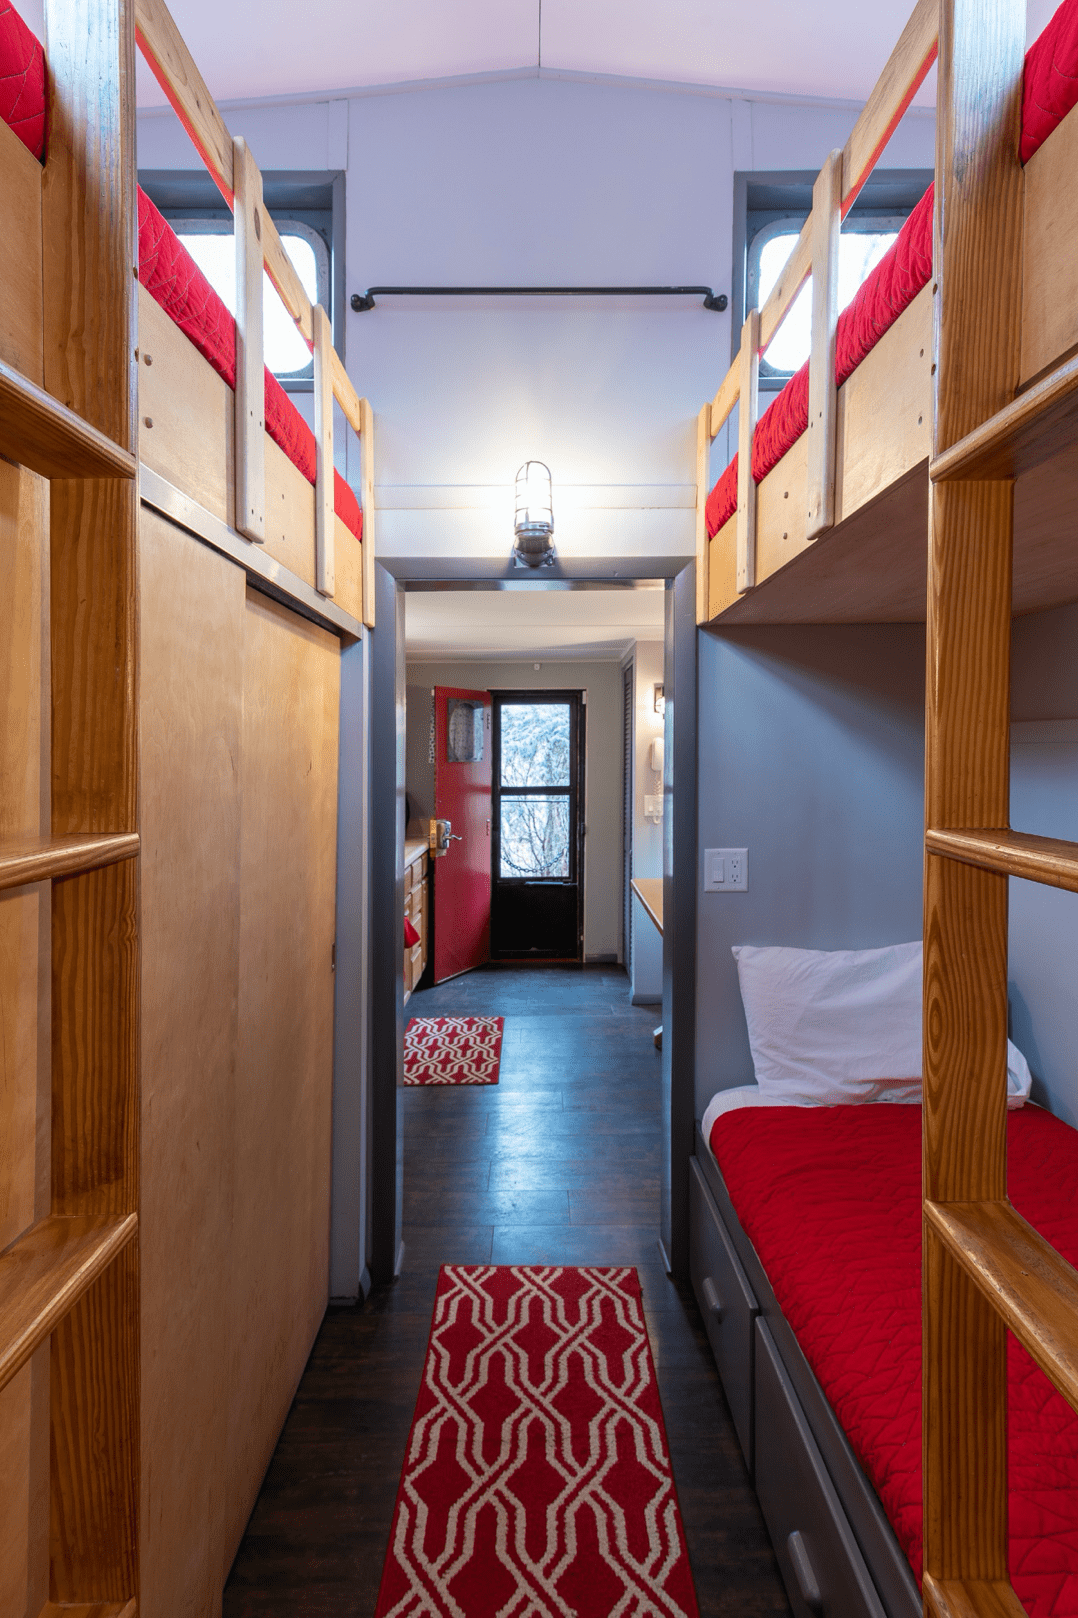 bunk beds in caboose